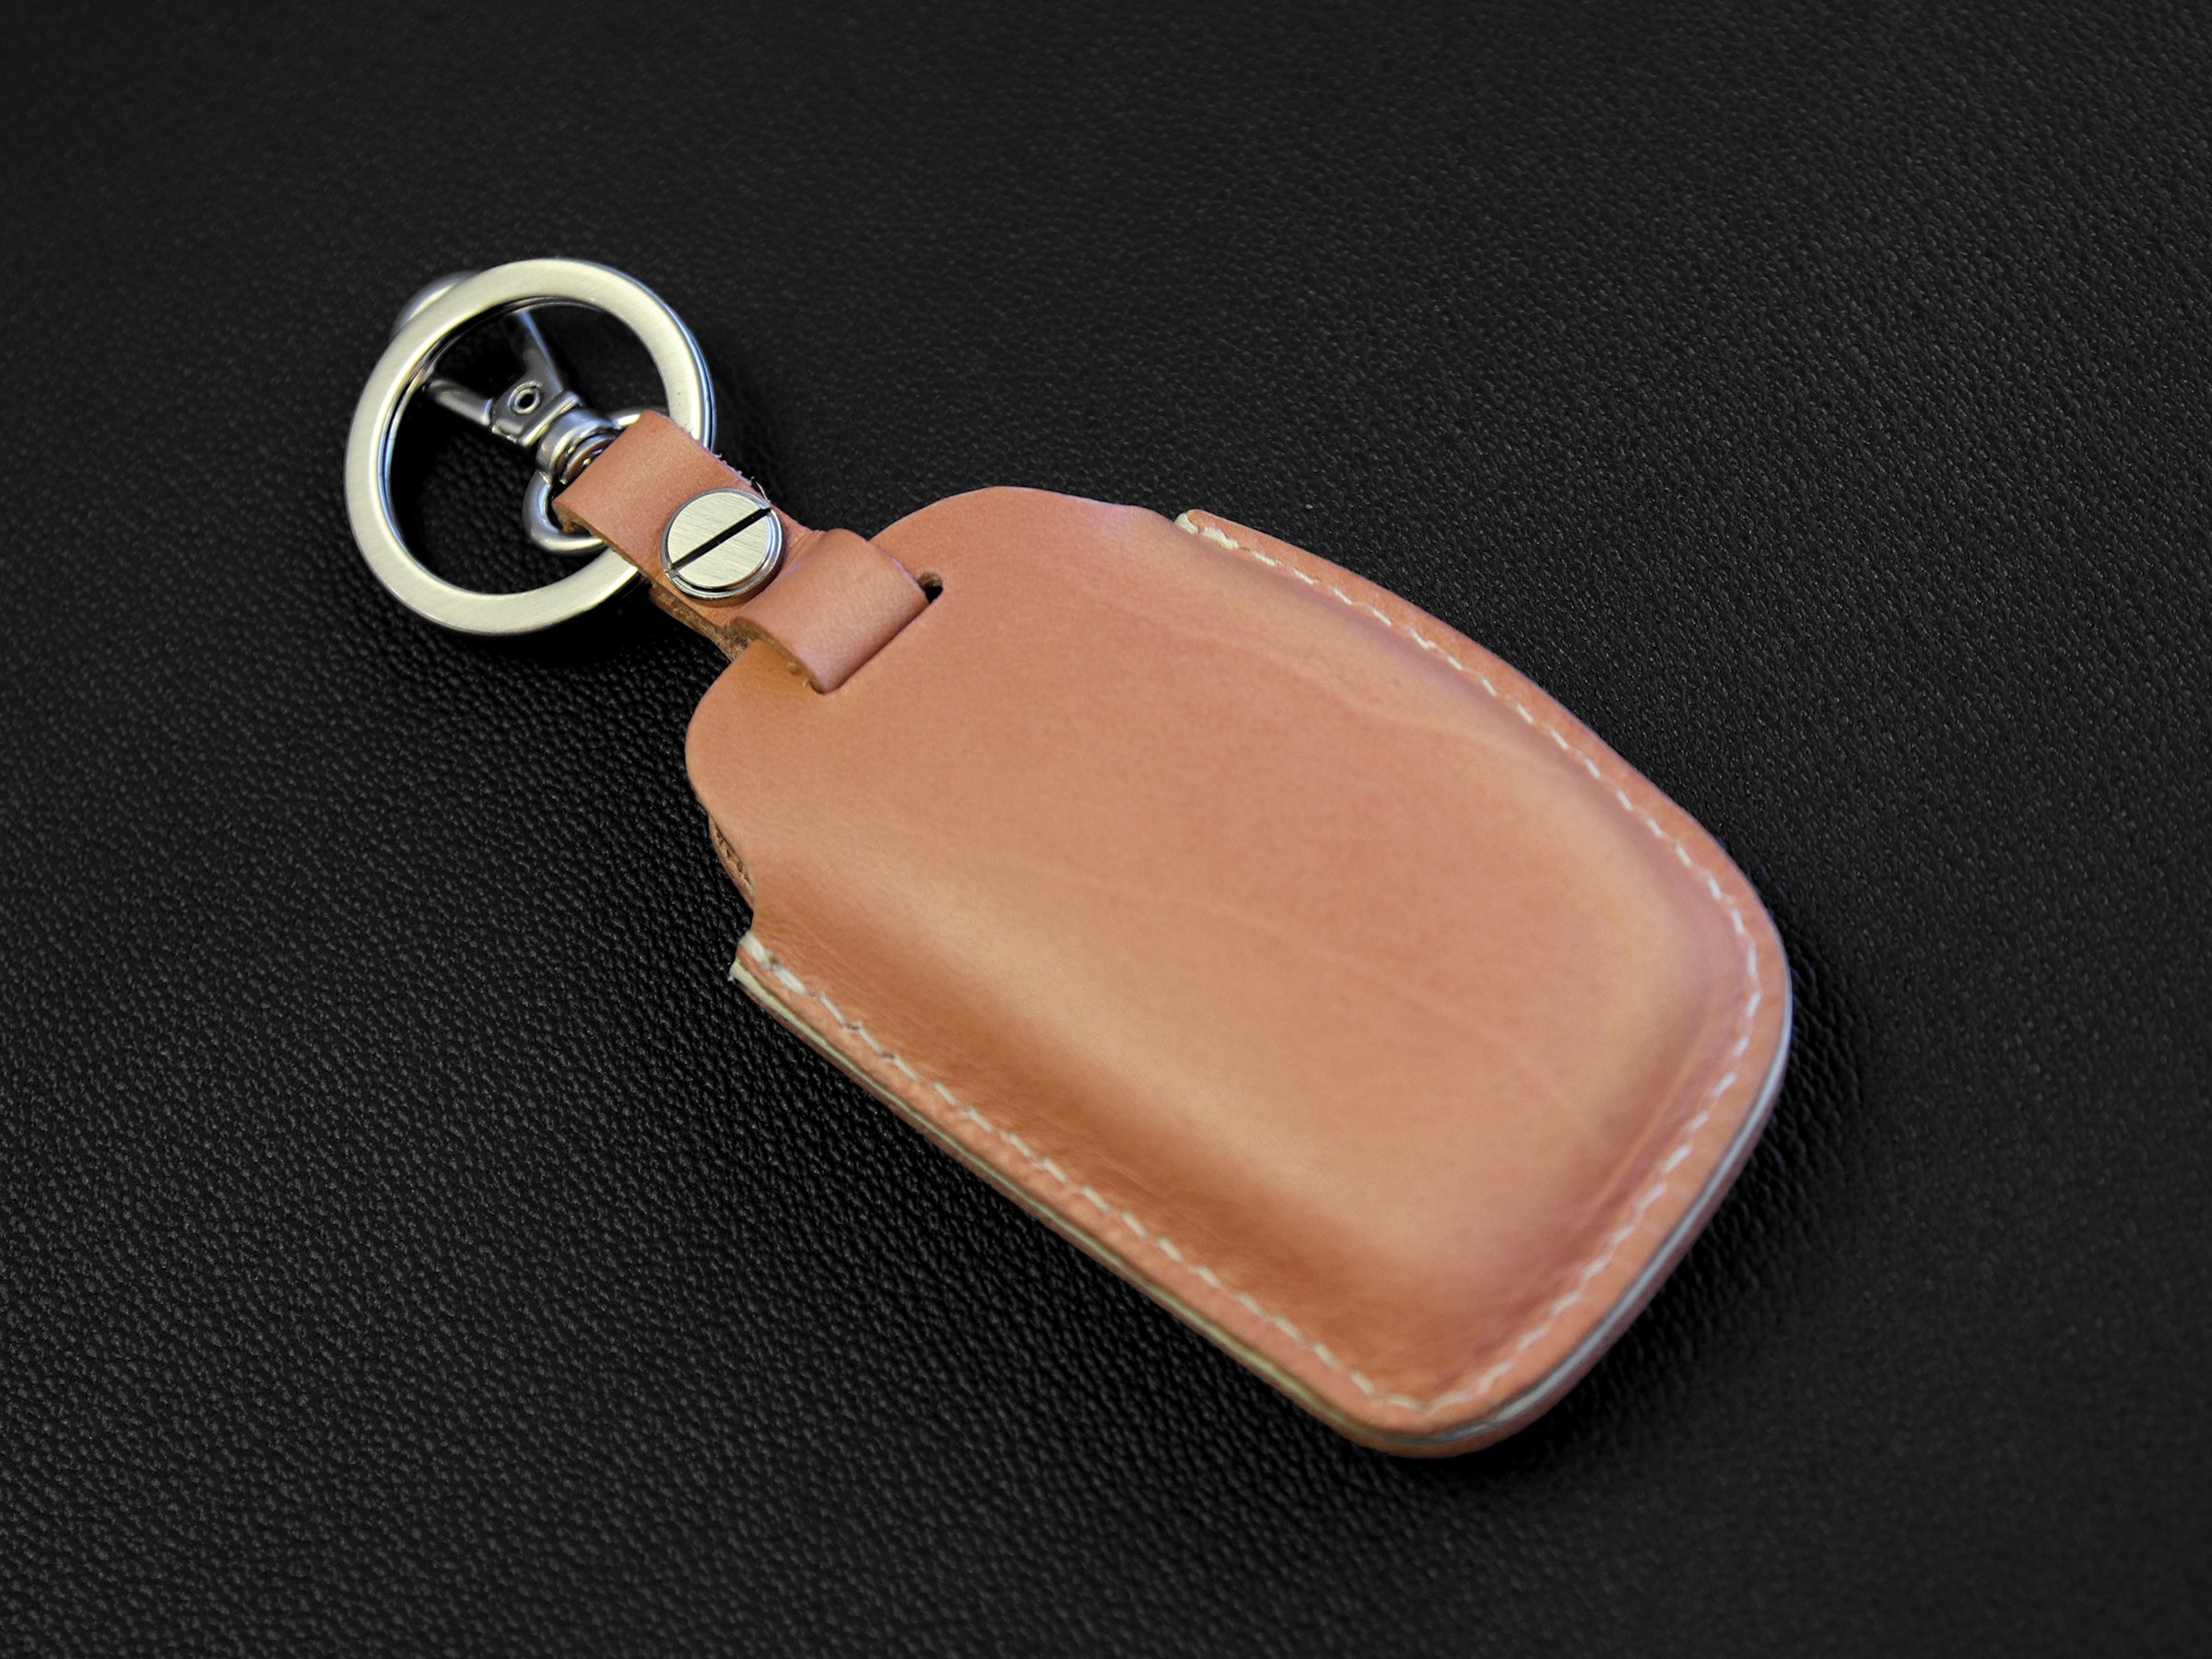 Hyundai [2-4] Key fob Leather Cover - Tucson Elantra Sonata Santa fe